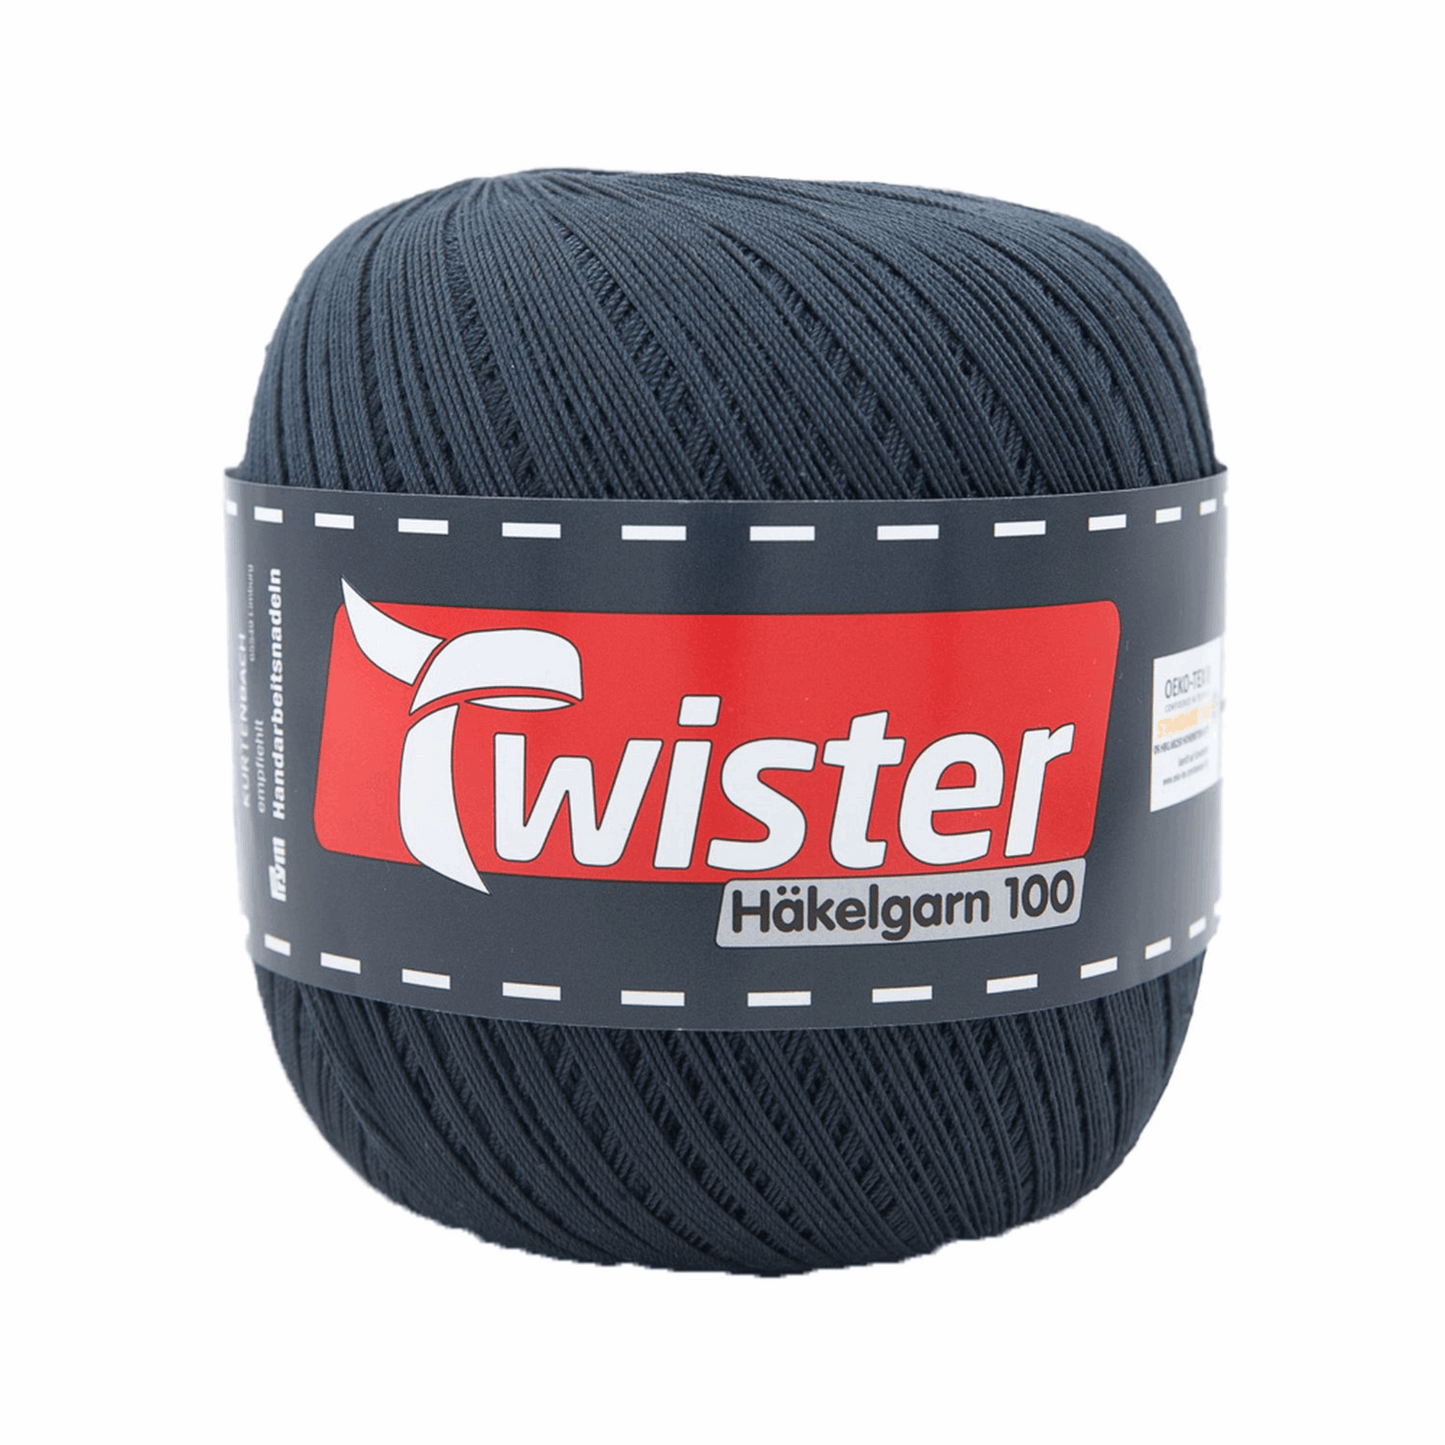 Twister Häkelgarn, 100g, 98303, Farbe anthrazit 19